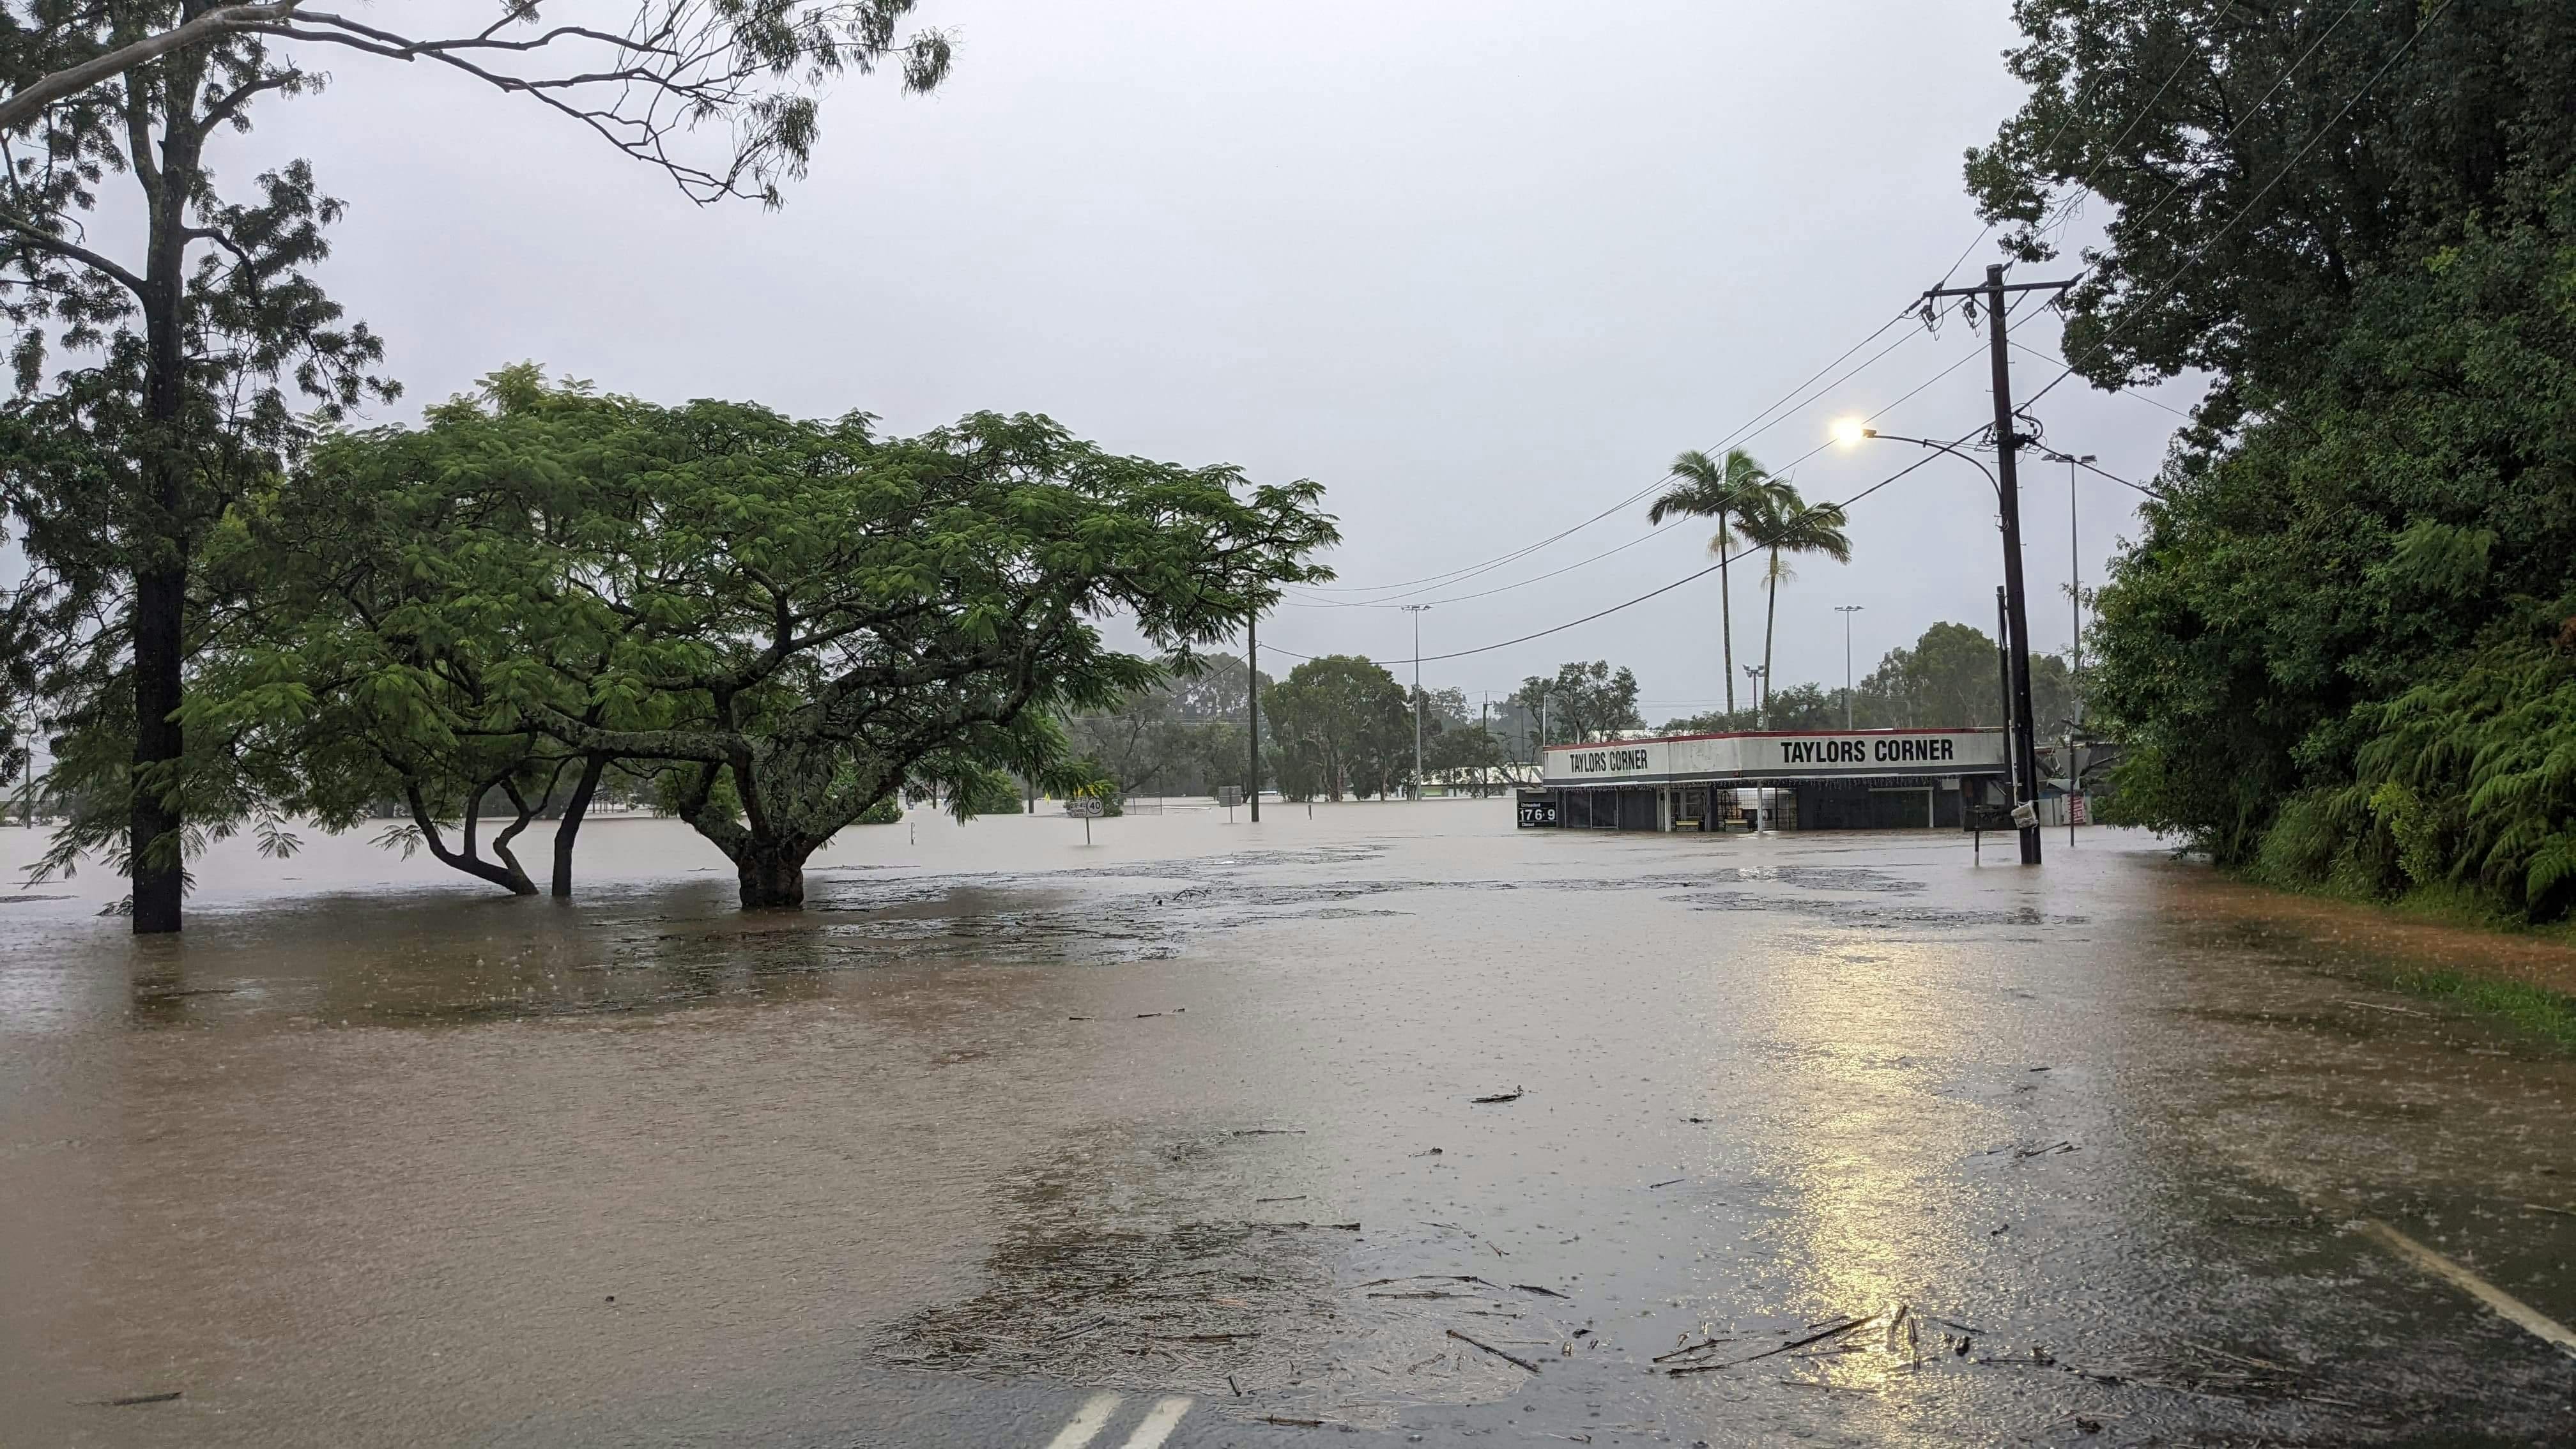 Flooding at Taylors Corner - 28 February 2022